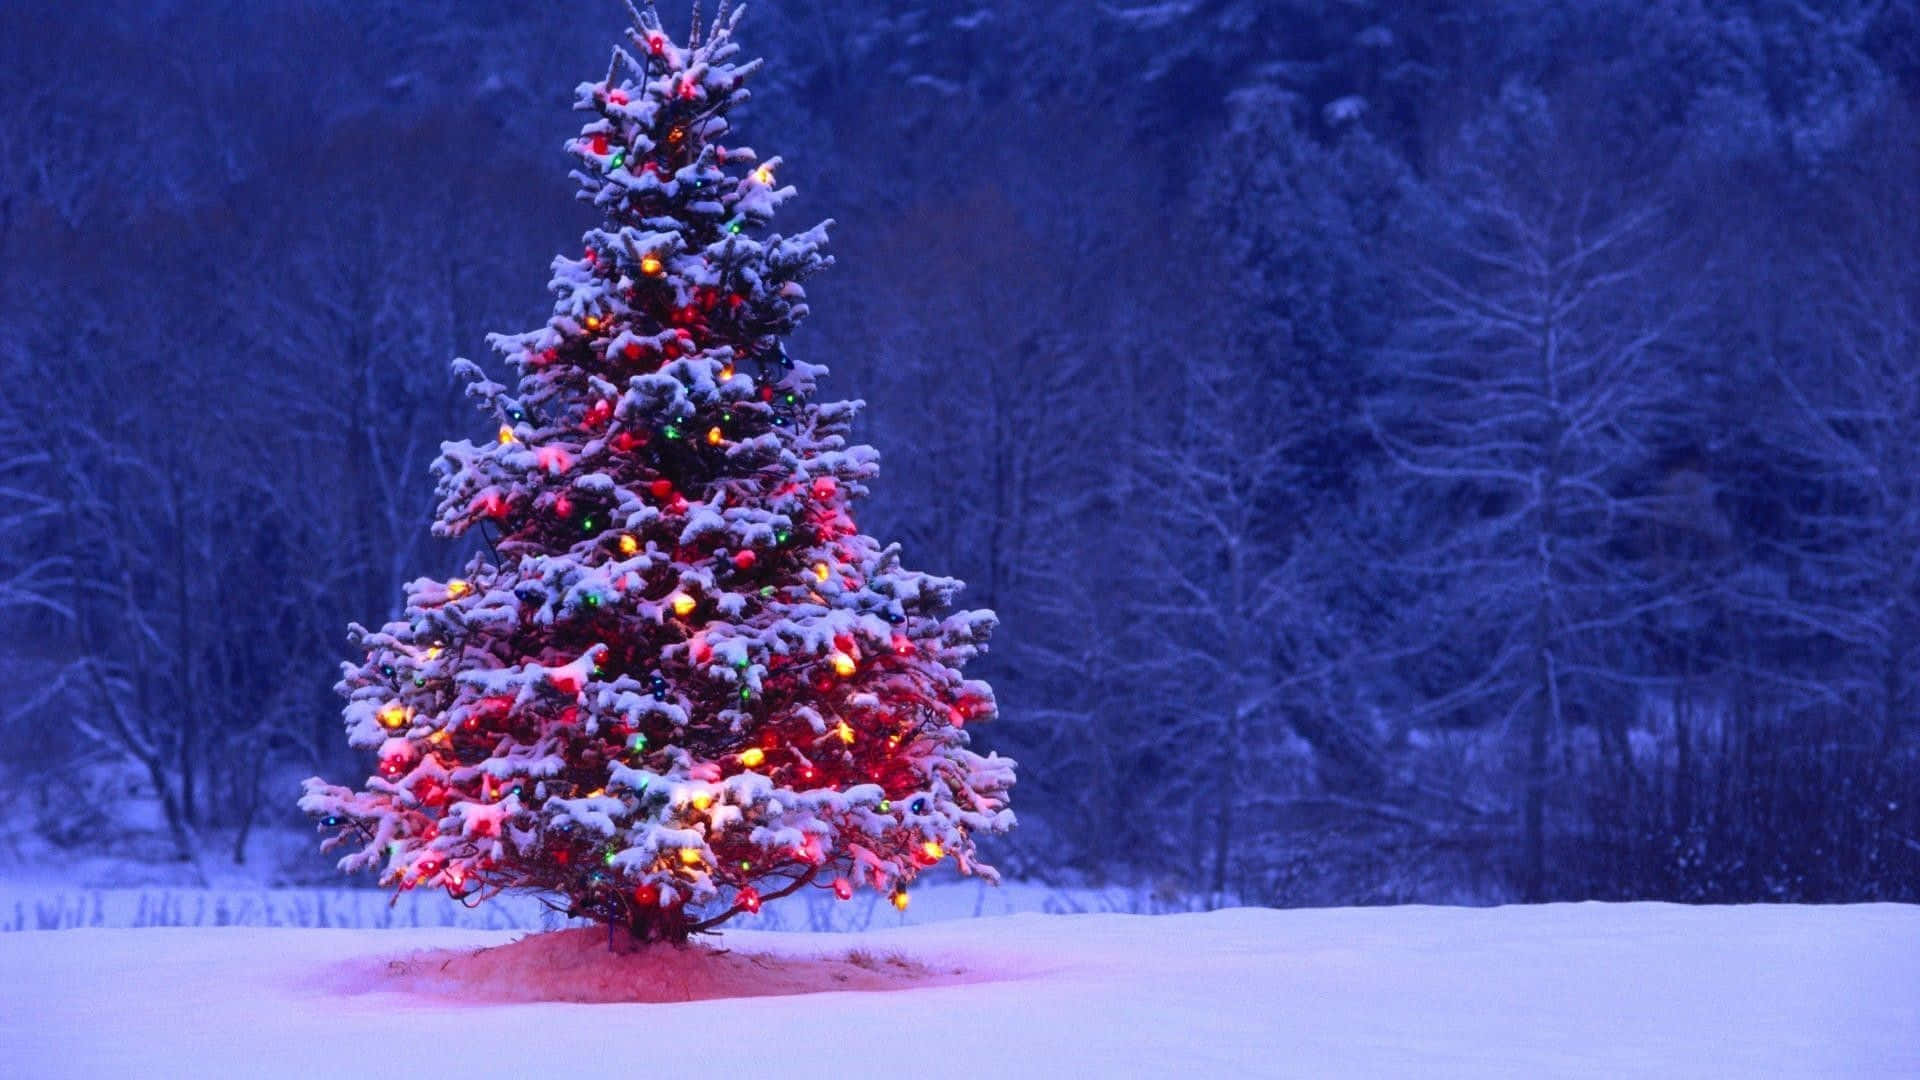 Illuminated Christmas Treein Snowy Landscape.jpg Wallpaper